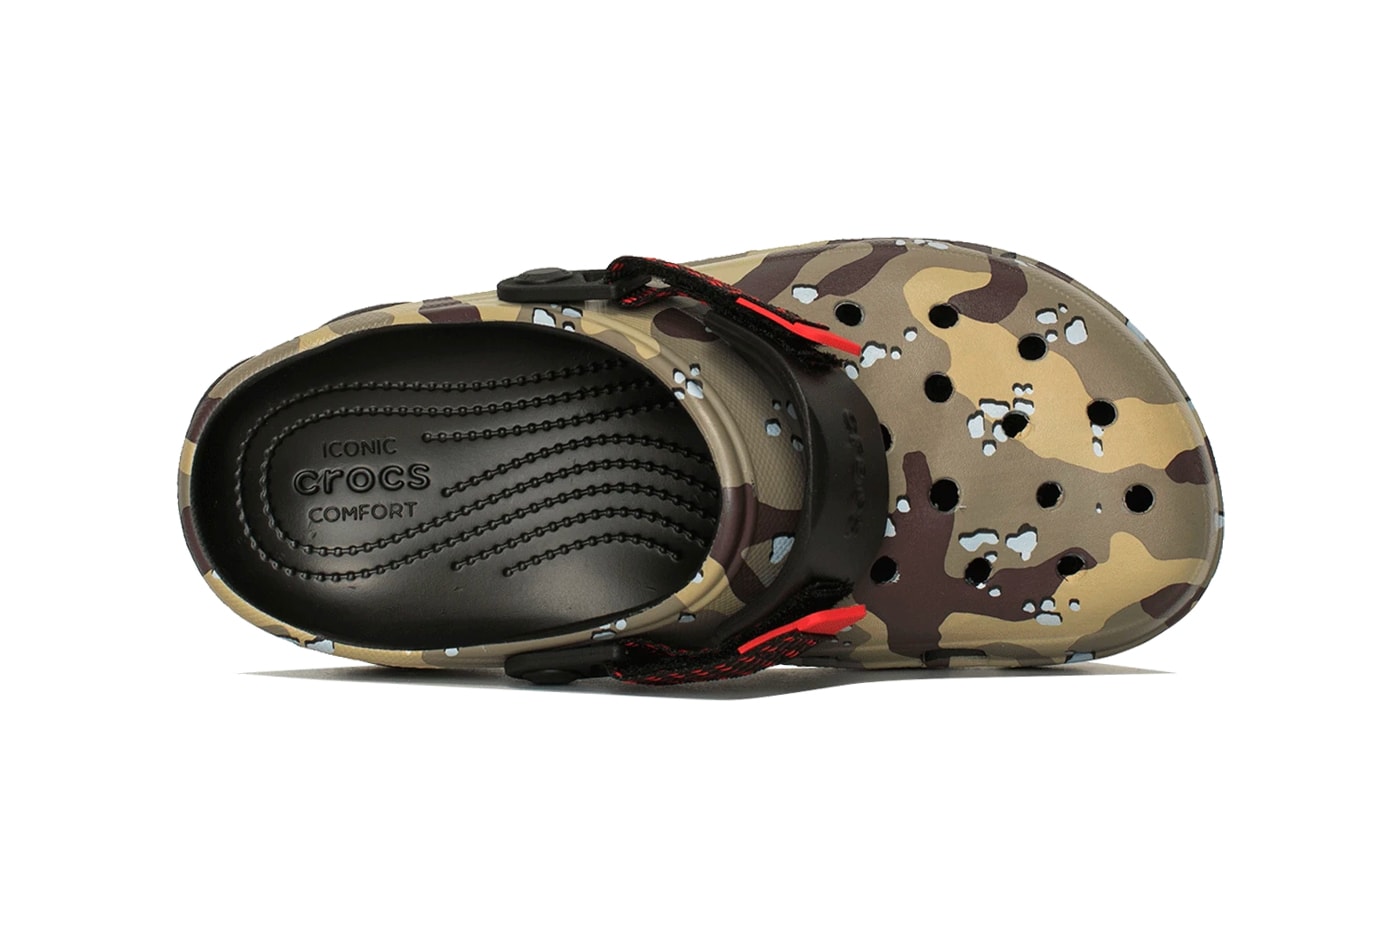 Crocs Classic All Terrain Clog in "Desert Camo M" Release footwear sandals beige khaki brown red